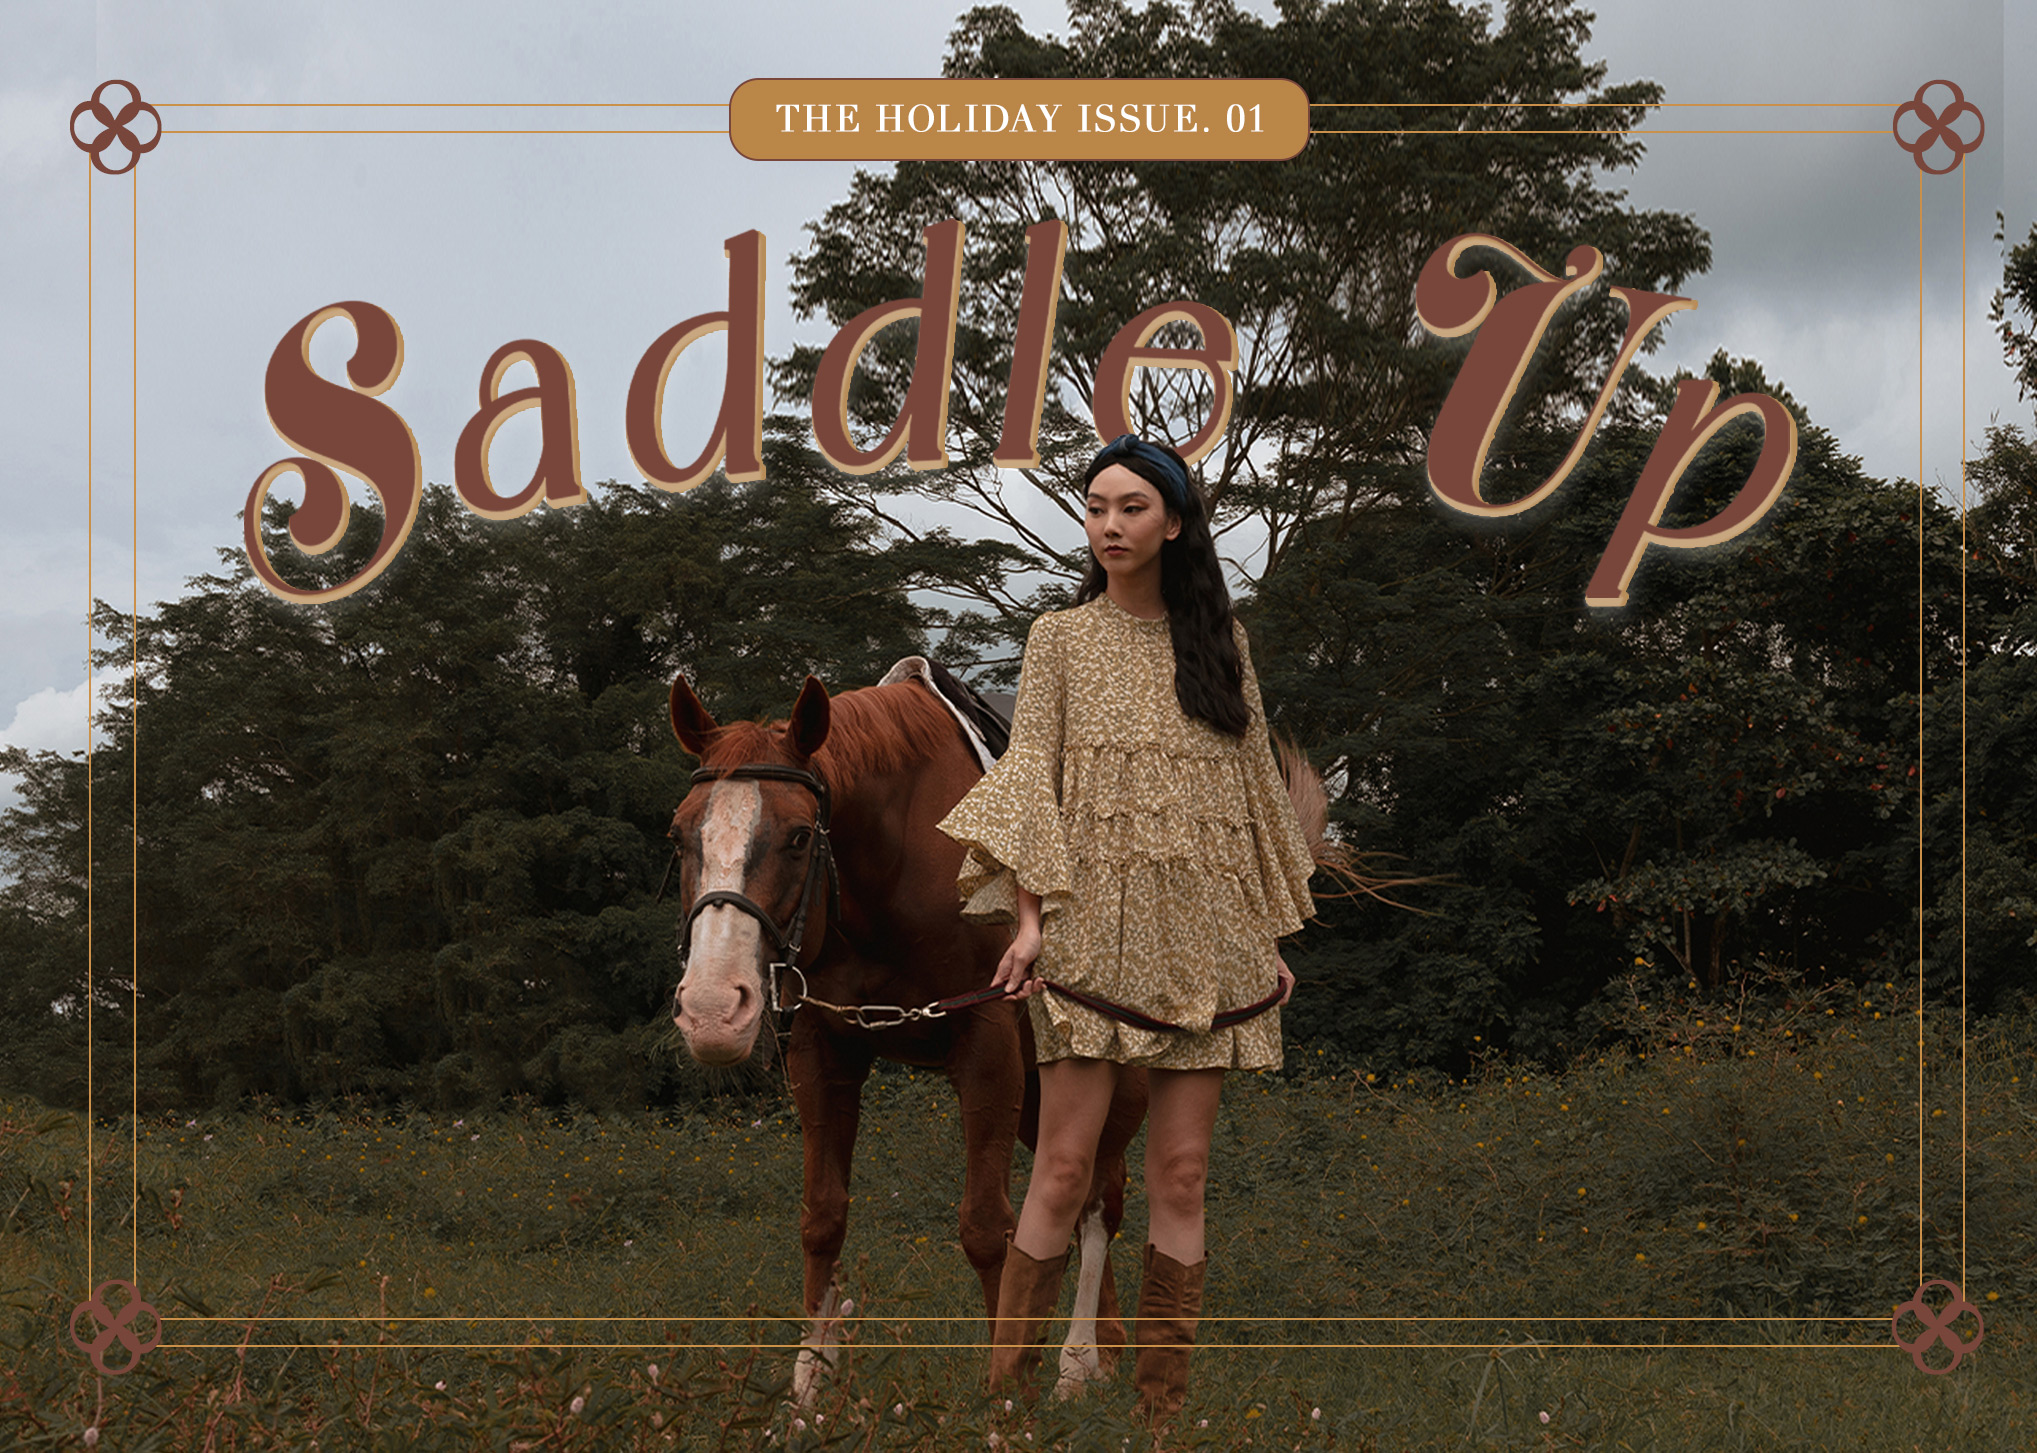 SADDLE UP | THE HOLIDAY ISSUE 01